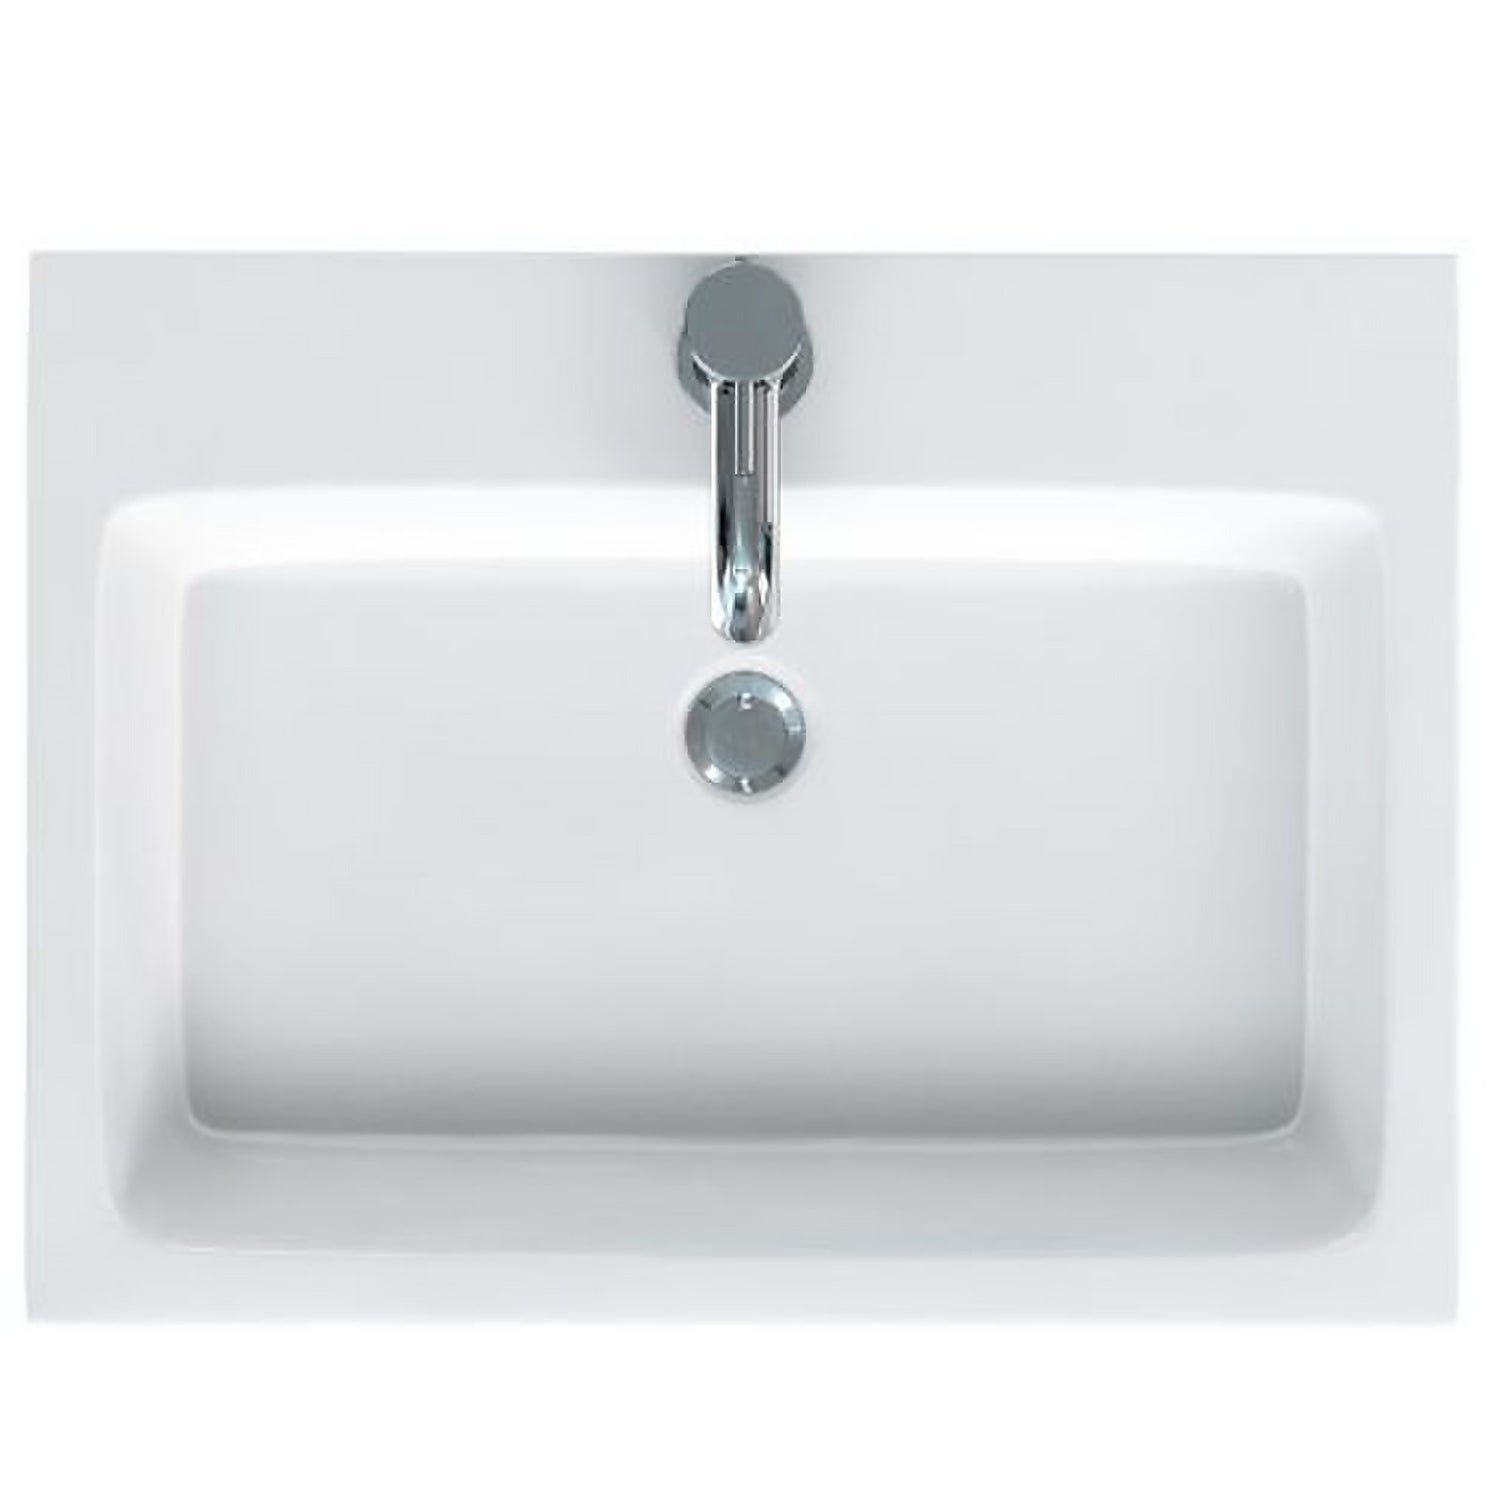 MyPlan 600 Bathroom Ceramic Semi Inset Basin Unit WalnutRRP £249 